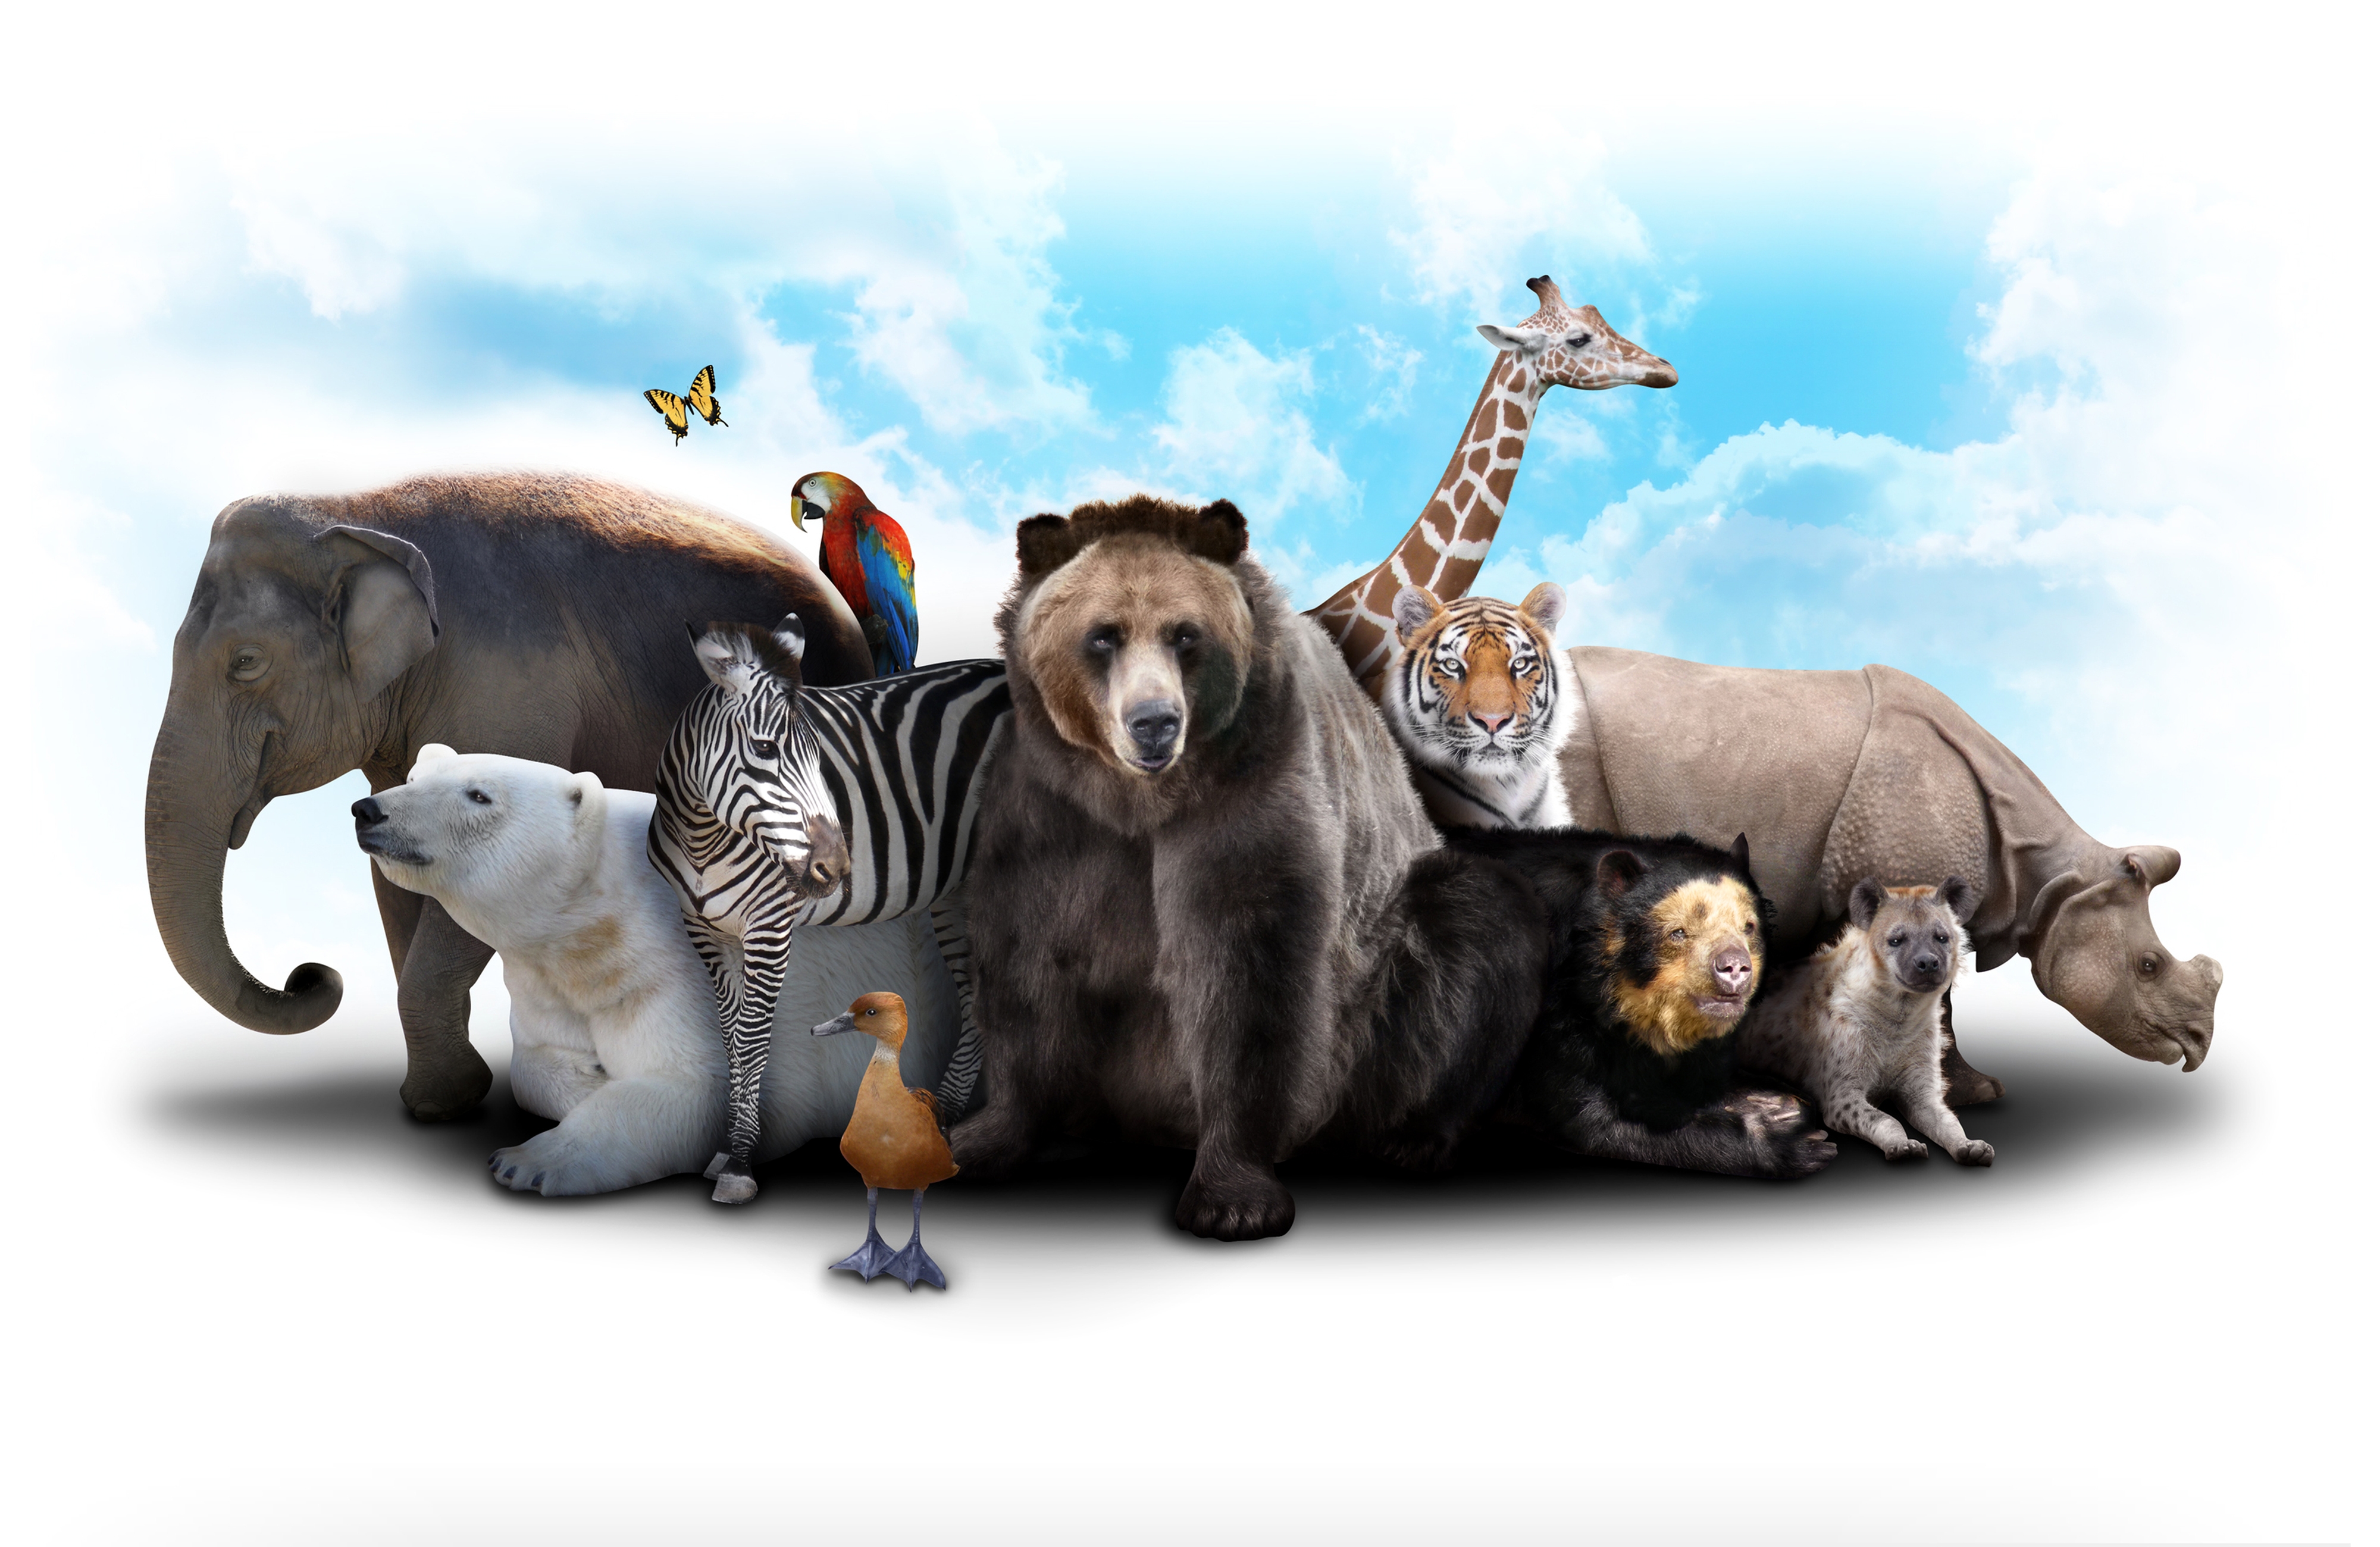 Обои тигр, жираф, небо, попугай, облака, звери, белый медведь, зебра, утка, слон, коала, медведь, гиена, бабочка, носорог, tiger, giraffe, the sky, parrot, animals, clouds, polar bear, zebra, duck, elephant, koala, bear, hyena, butterfly, rhino разрешение 4000x2600 Загрузить